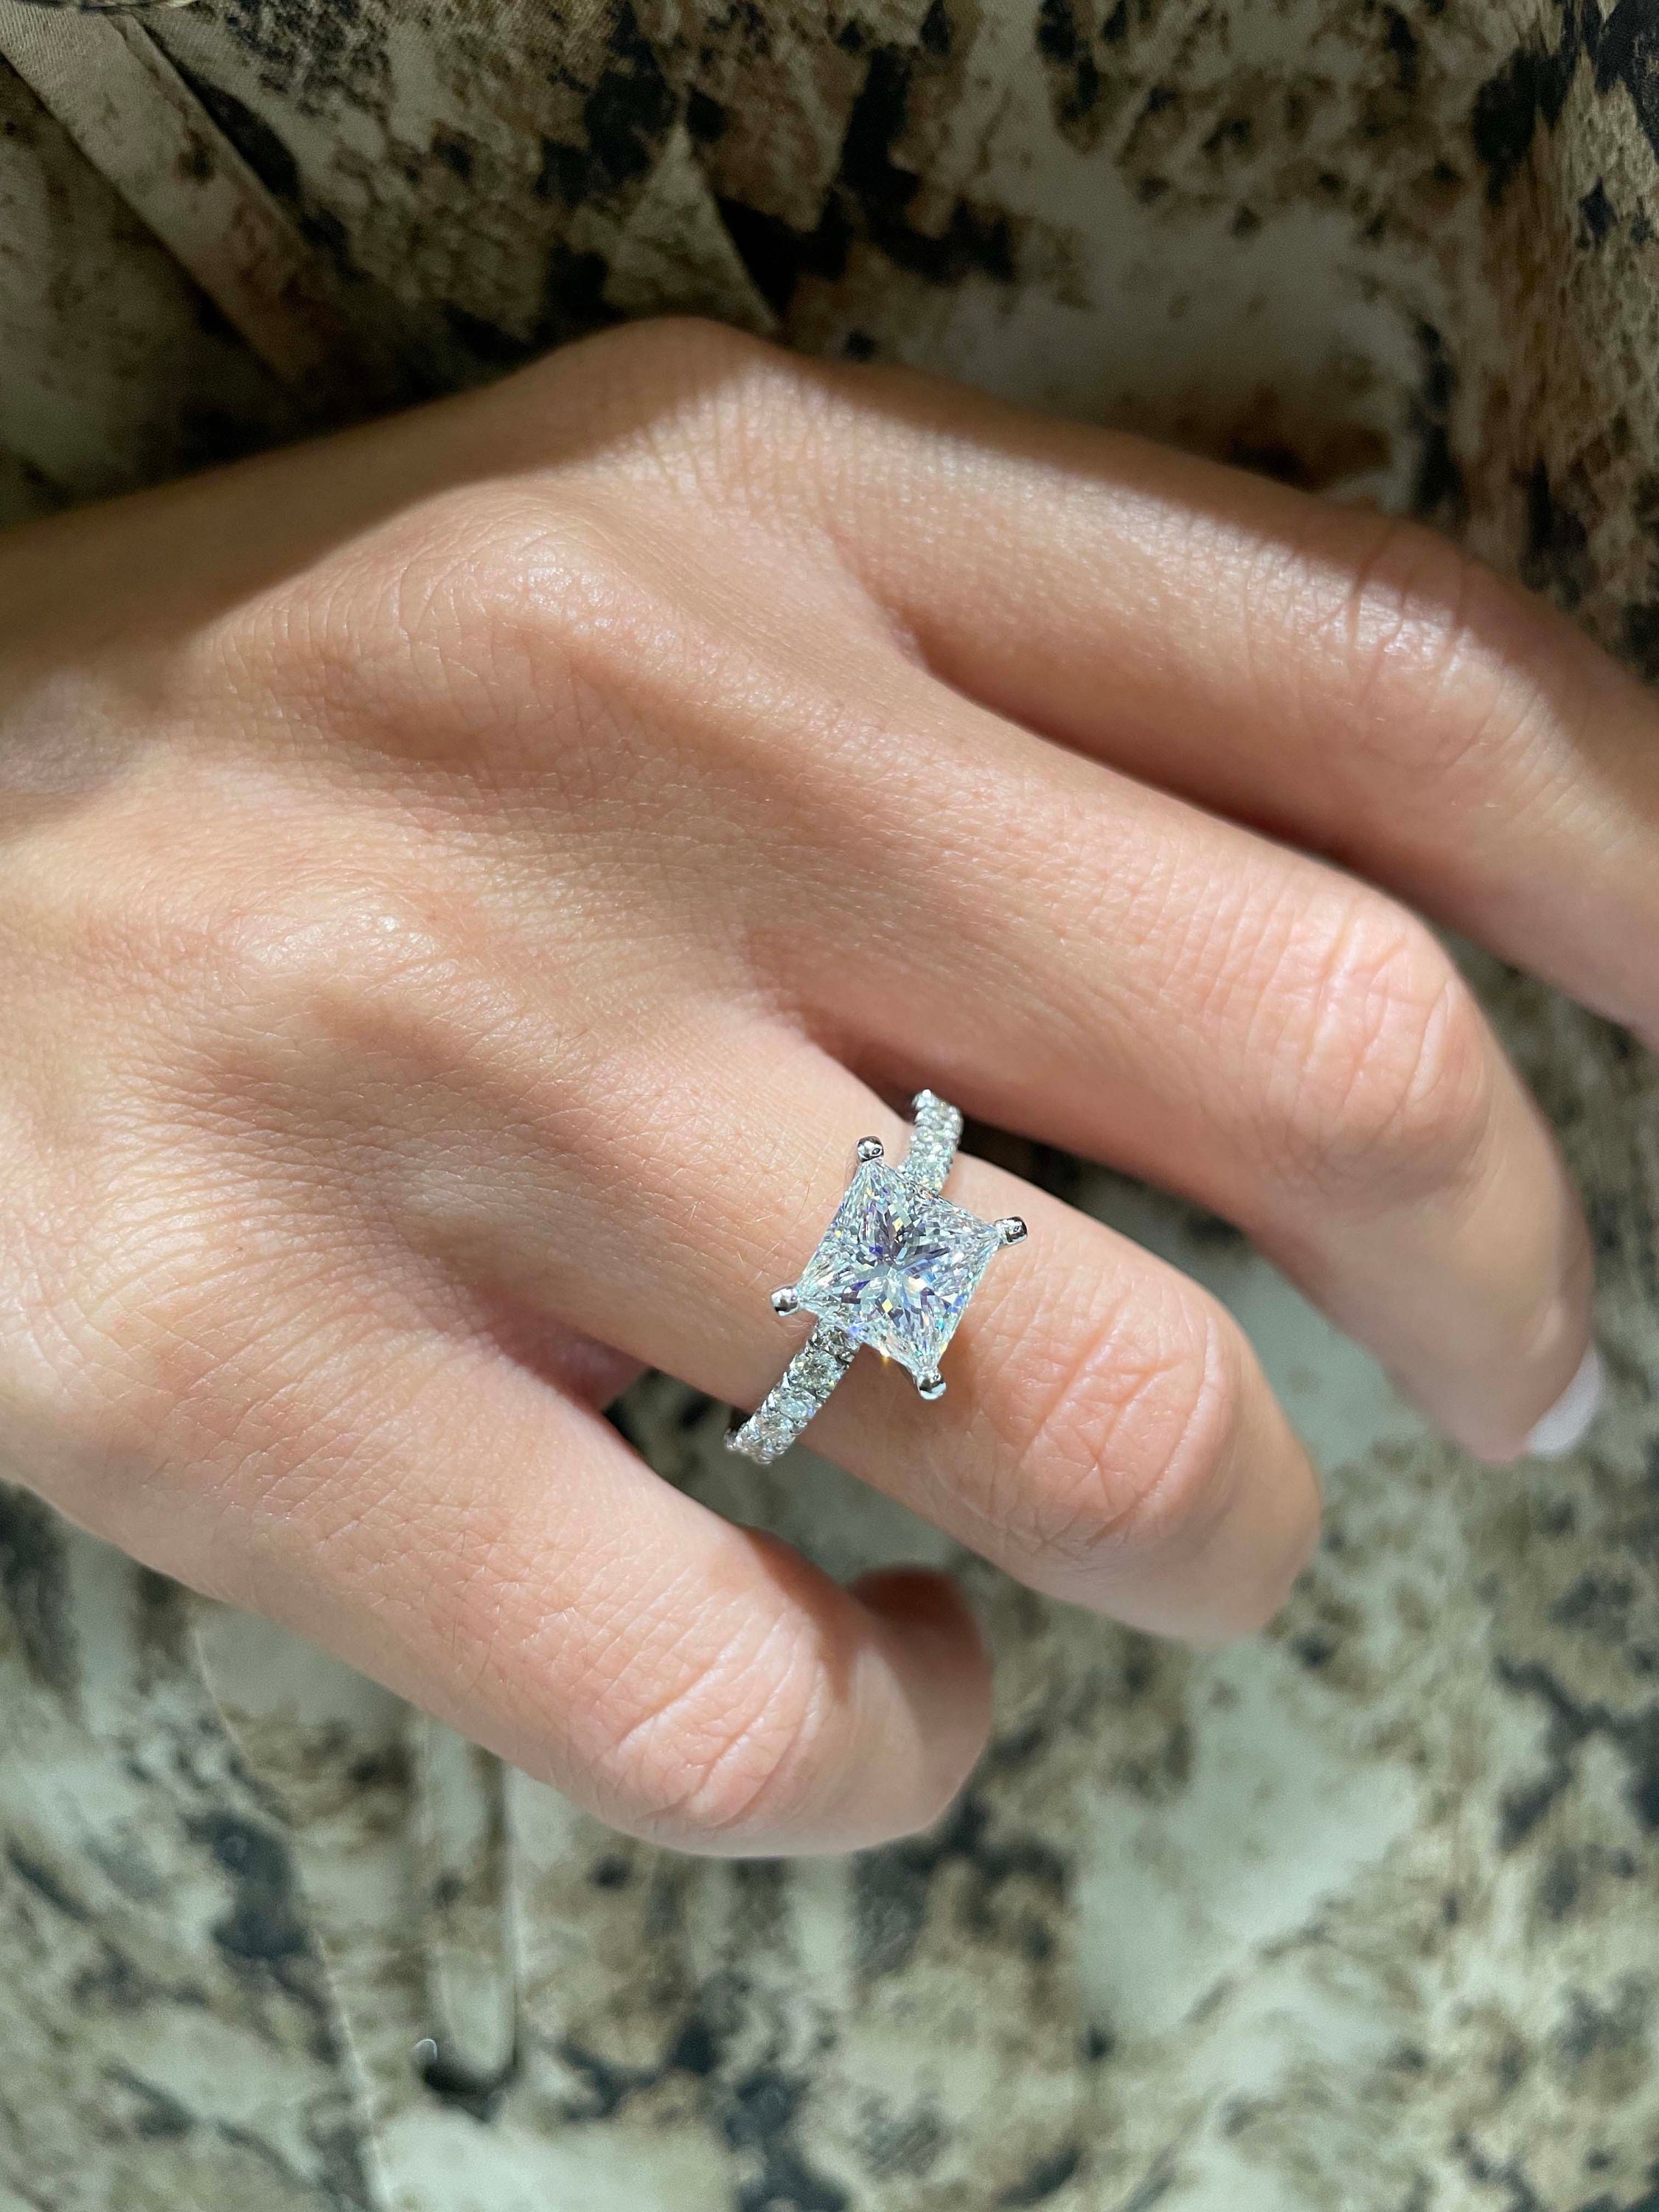 14k White Gold Finish 2.4 Ct Princess Diamond Wedding Bridal Set Engagement Ring 